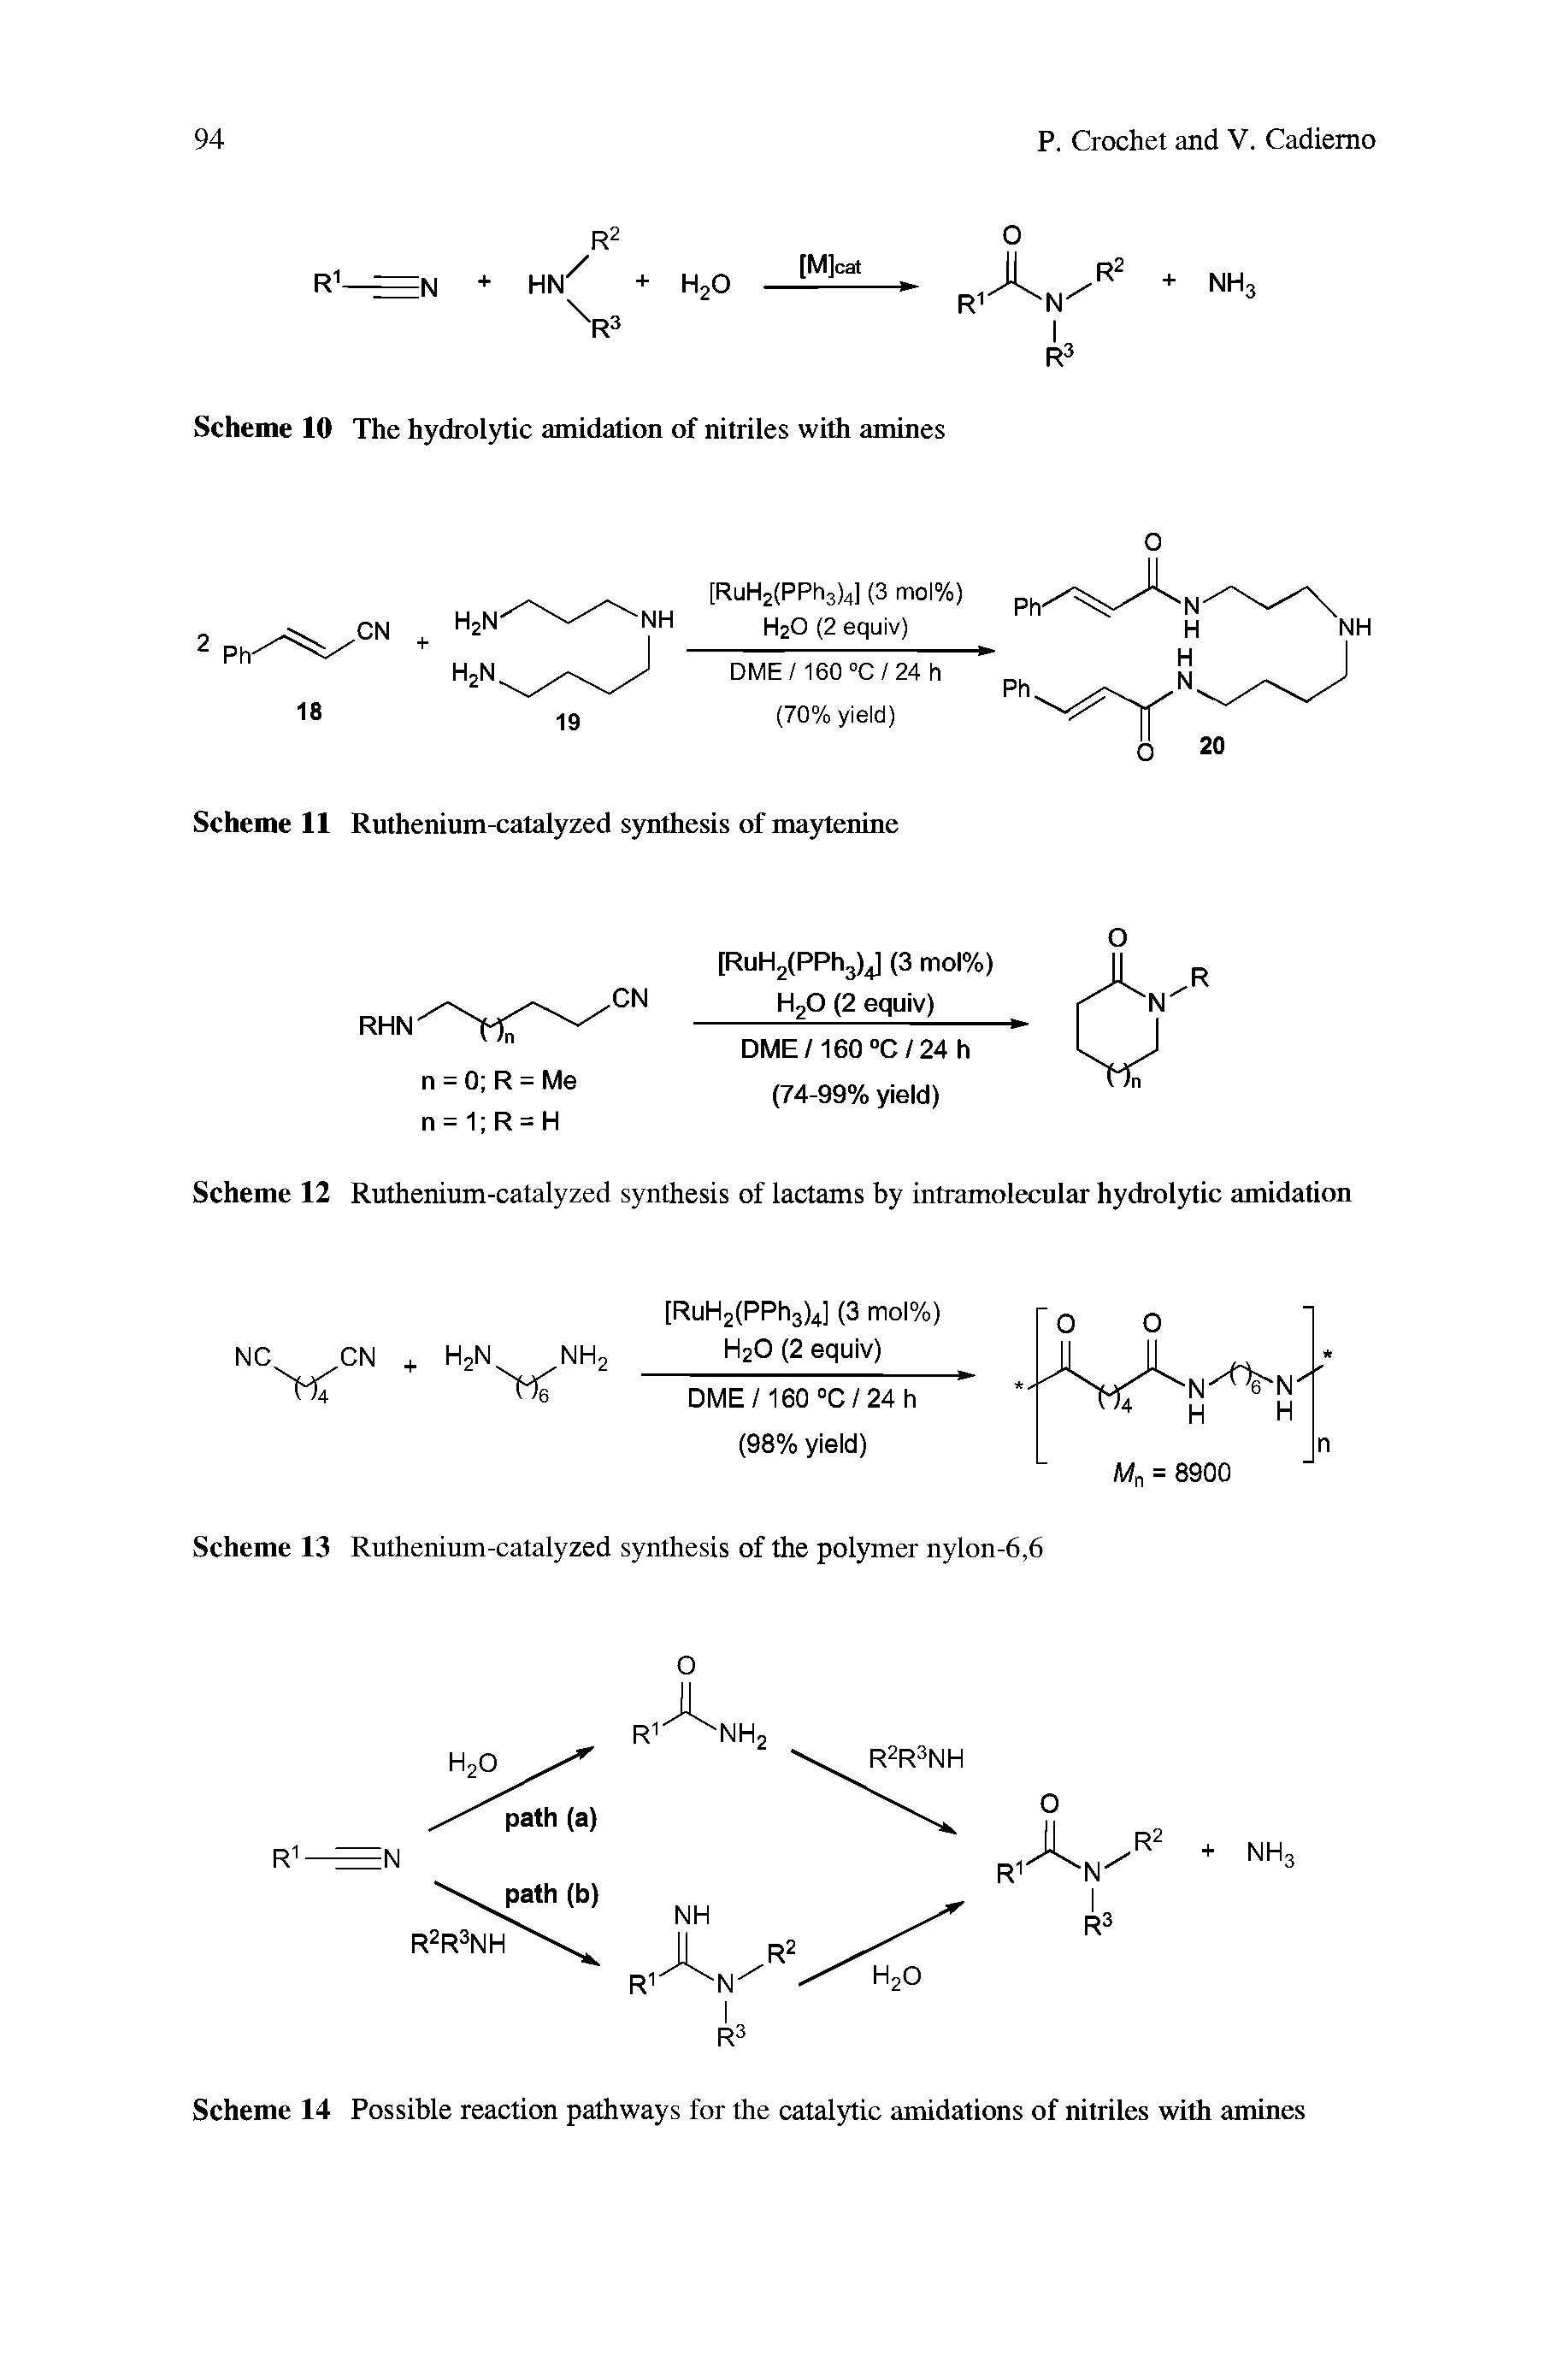 Scheme 12 Ruthenium-catalyzed synthesis of lactams by intramolecular hydrolytic amidation...